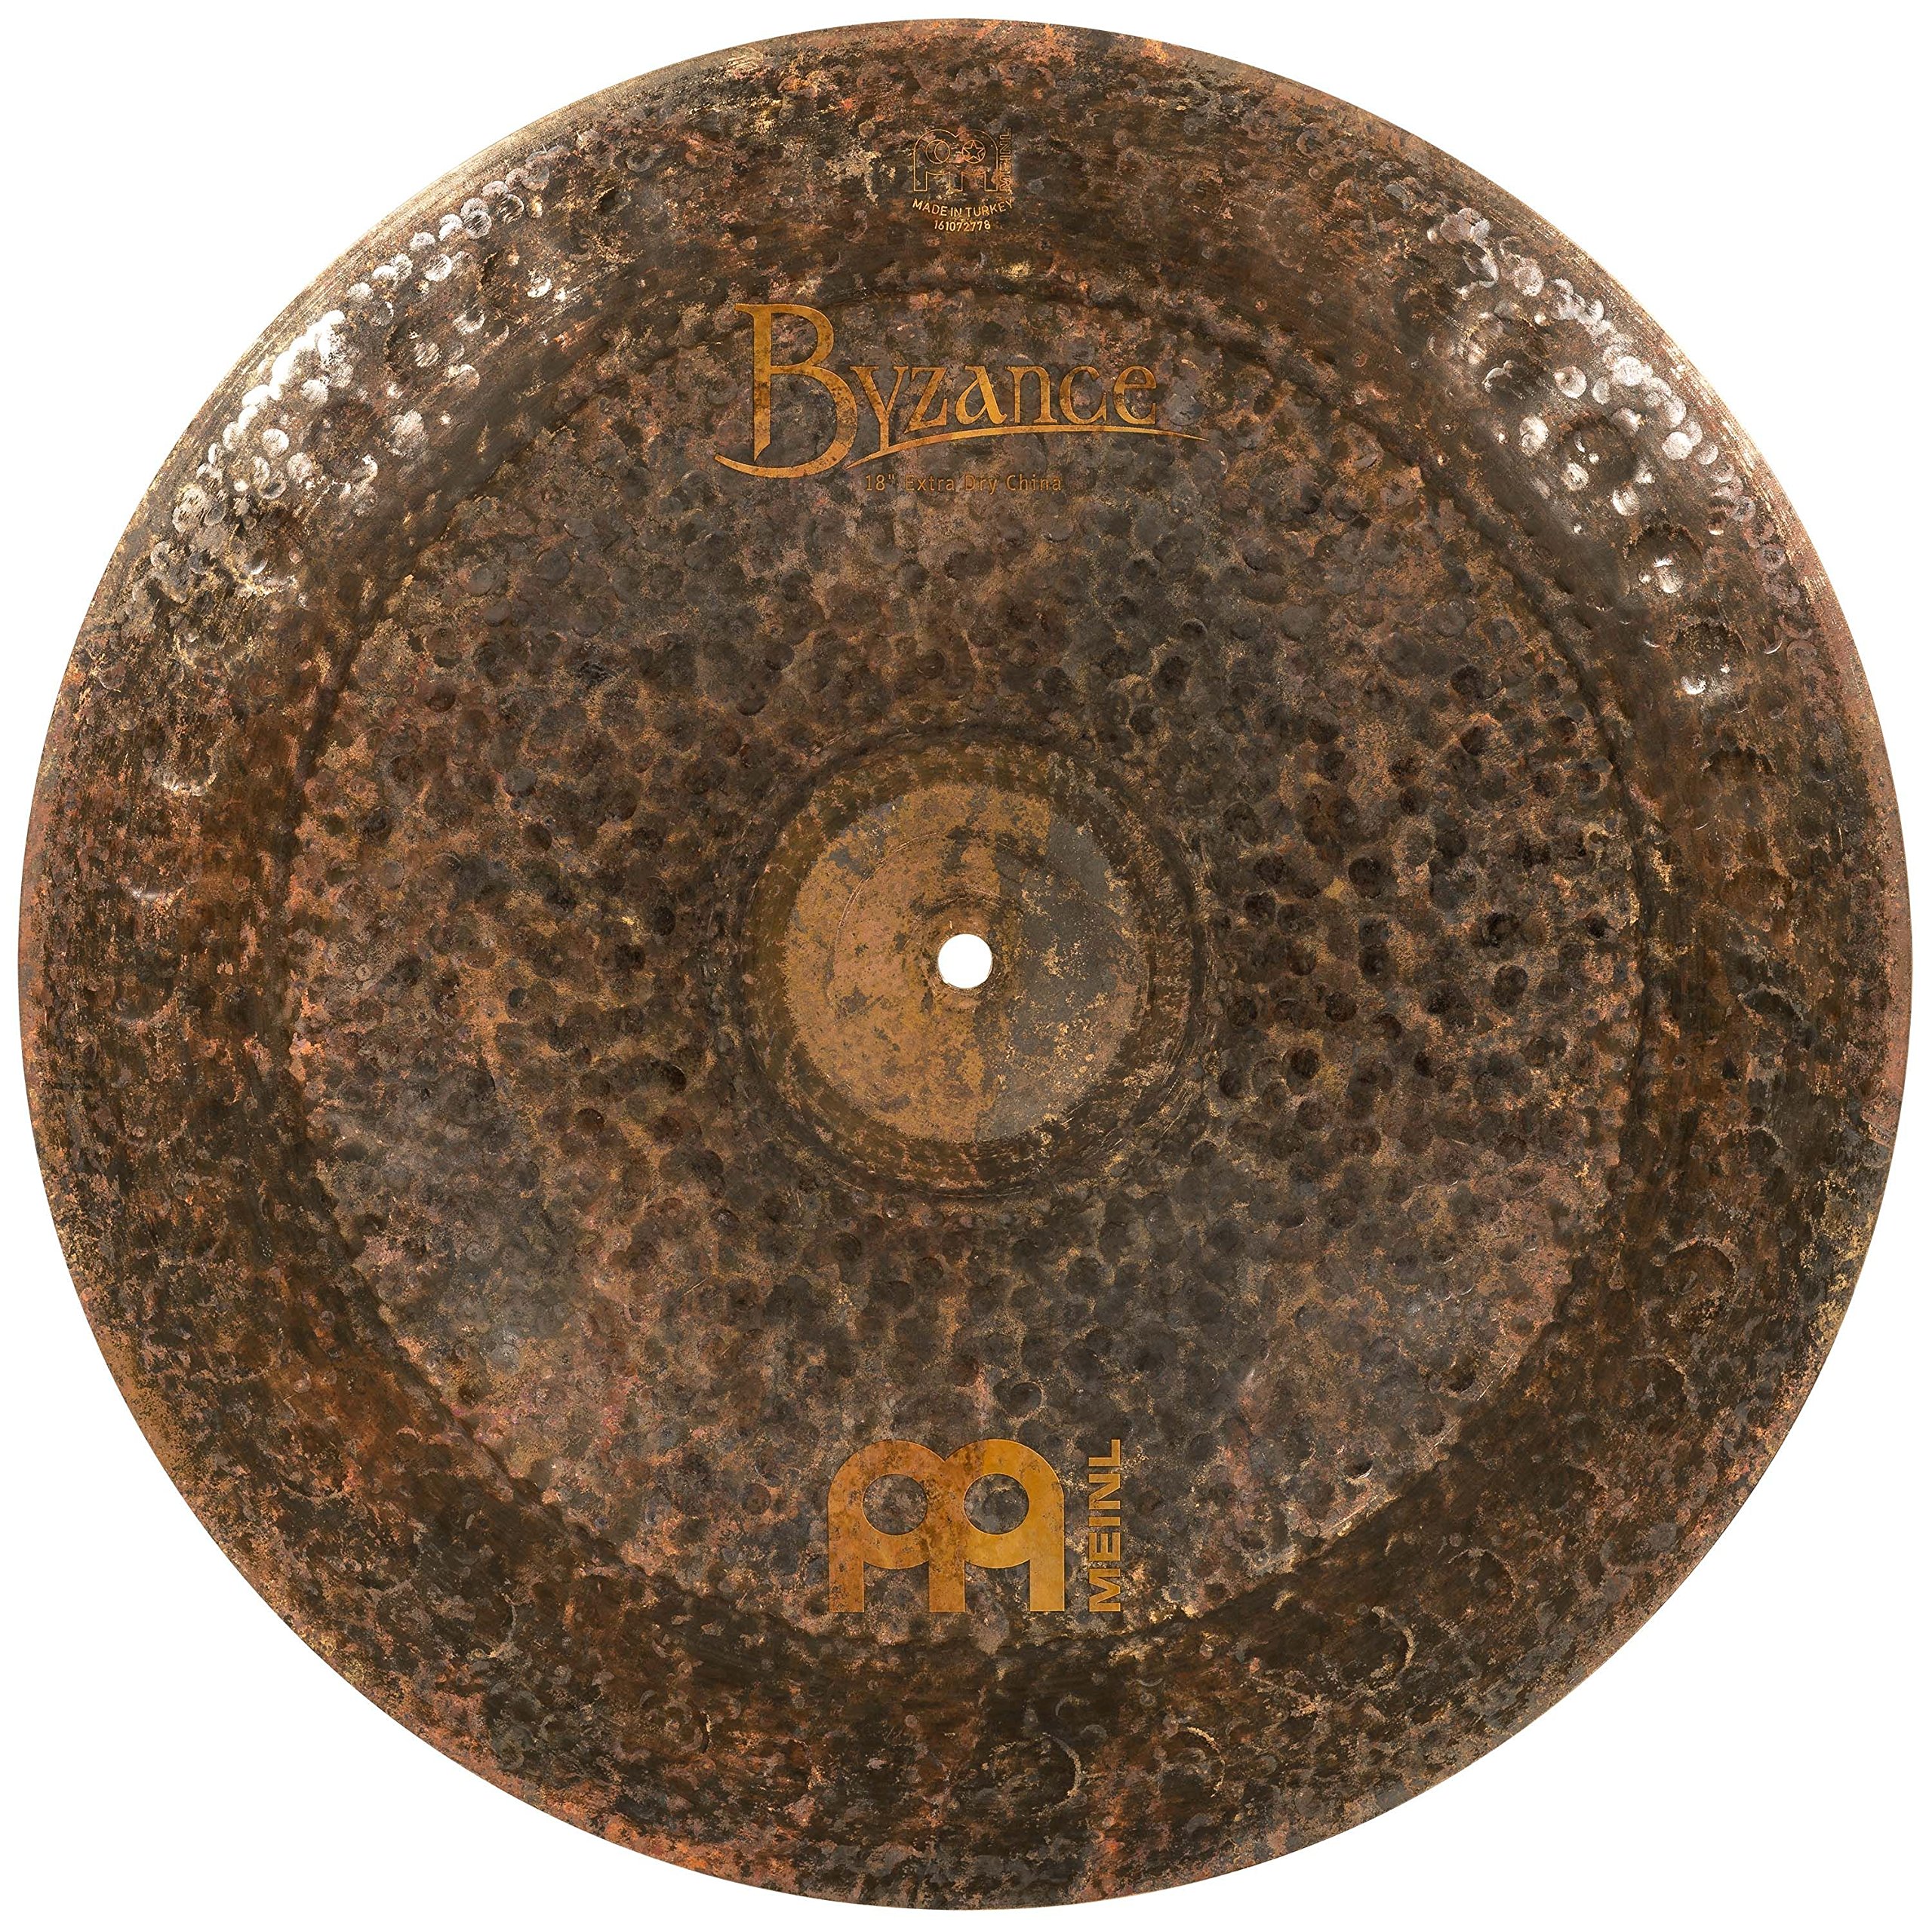 Meinl Cymbals Byzance Extra Dry China 18 Zoll (Video) Schlagzeug Becken (45,72cm) B20 Bronze, Naturbelassenes und Traditionelles Finish (B18EDCH)